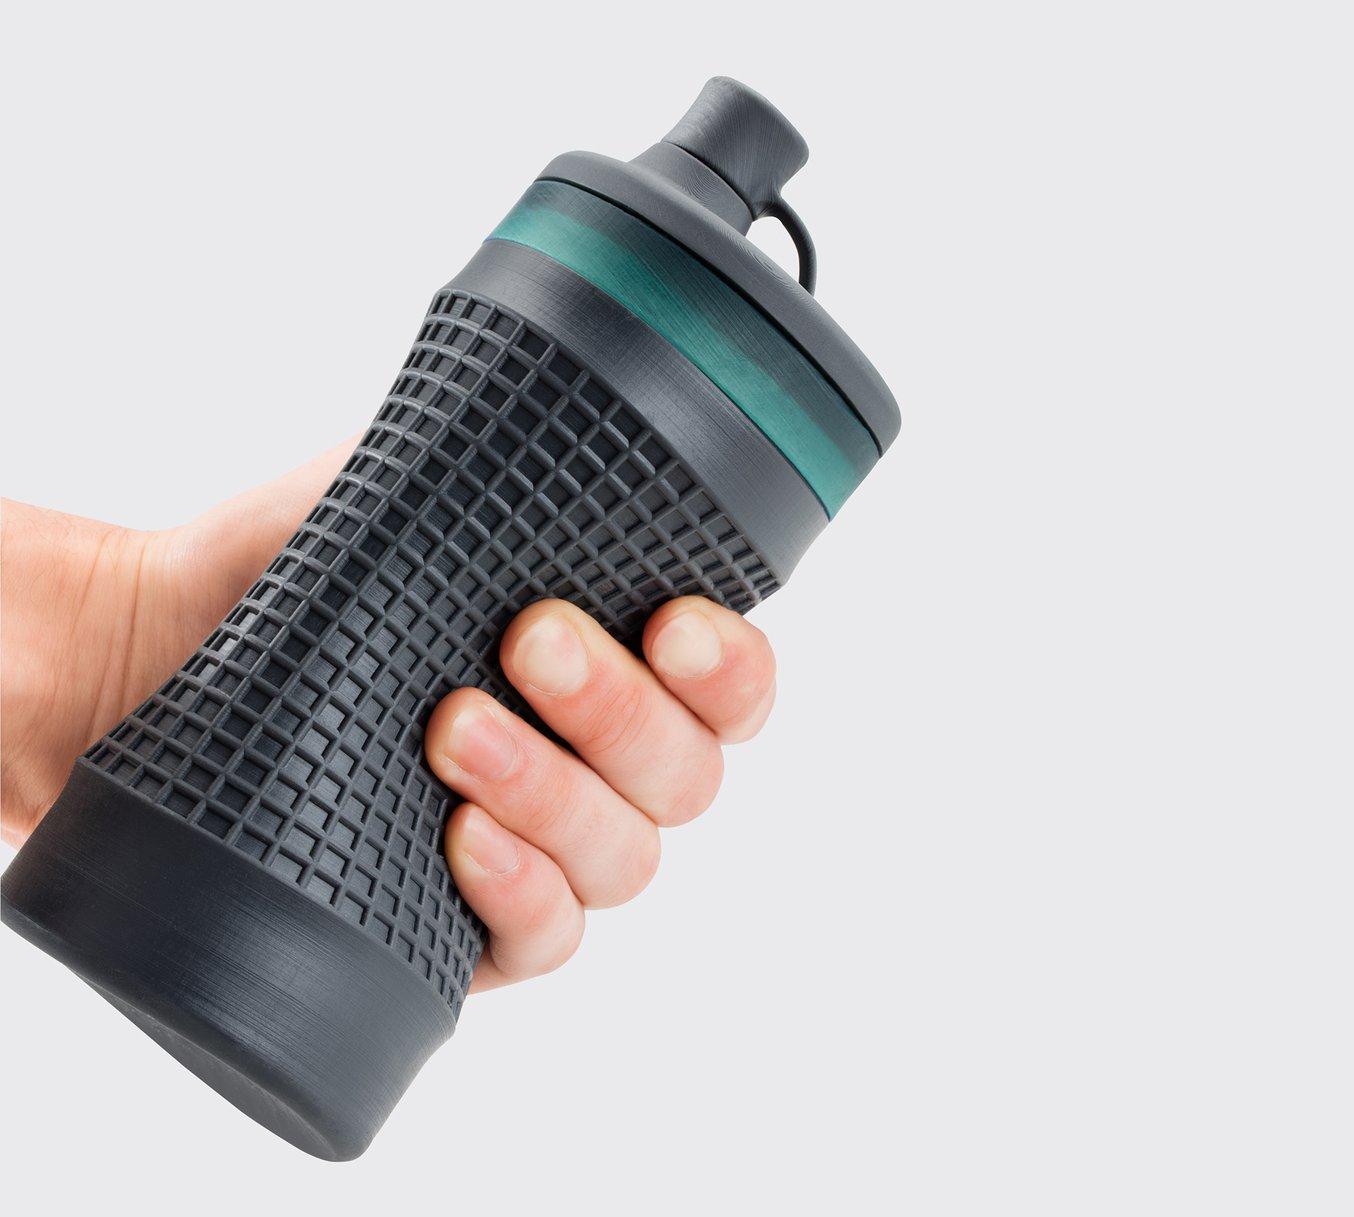 A water bottle prototype 3D printed in Flexible Resin.